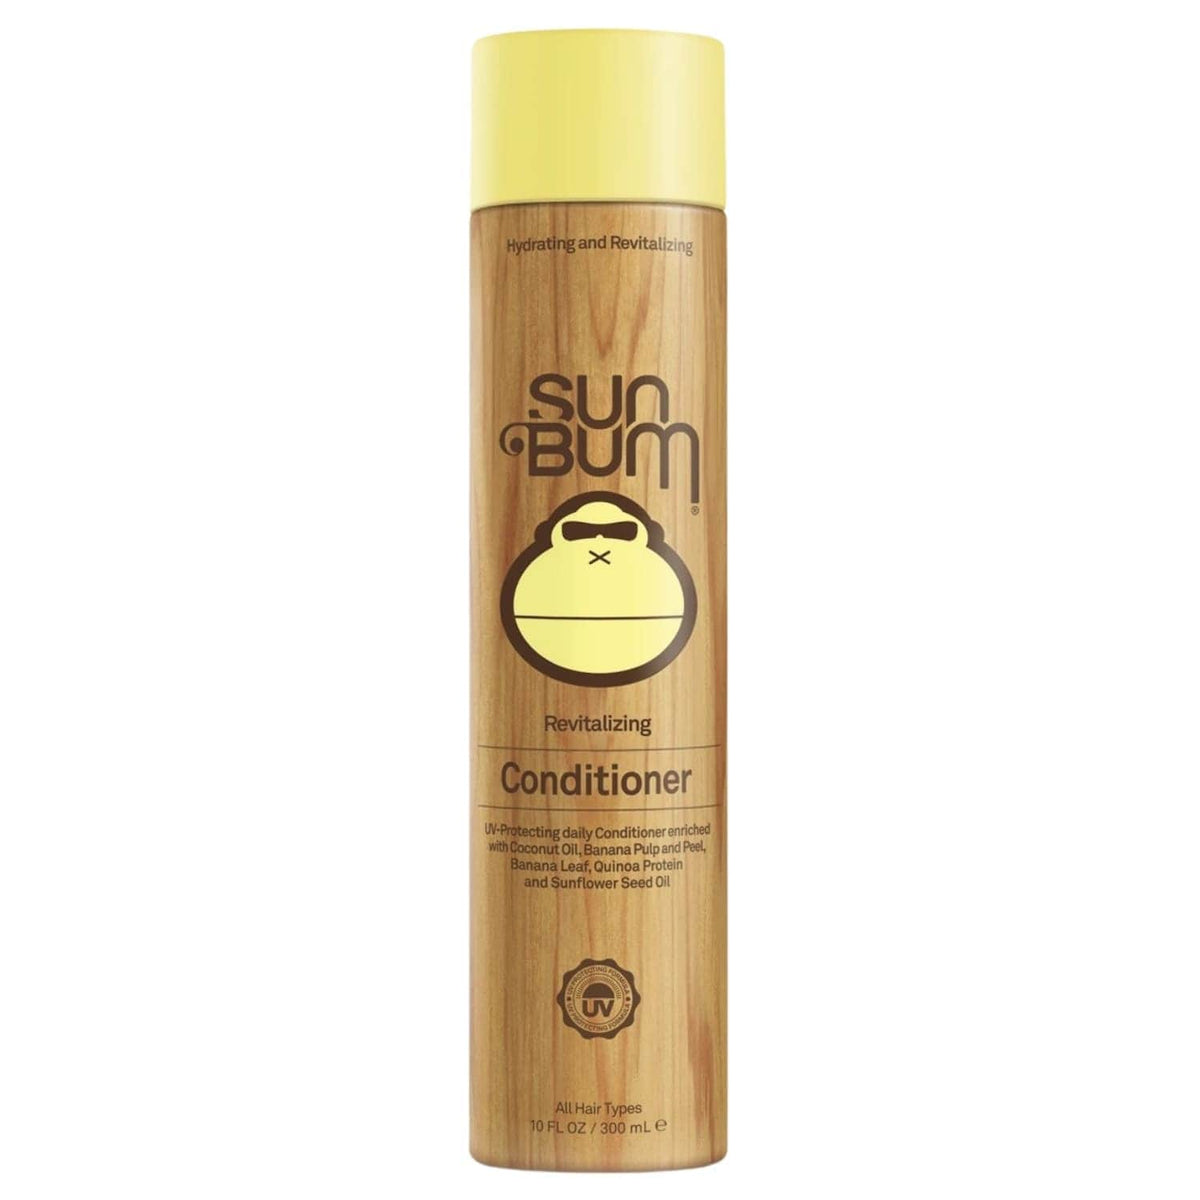 Sun Bum Revitalizing Conditioner 300ml - Hair Shampoo/Conditioner by Sun Bum 300ml